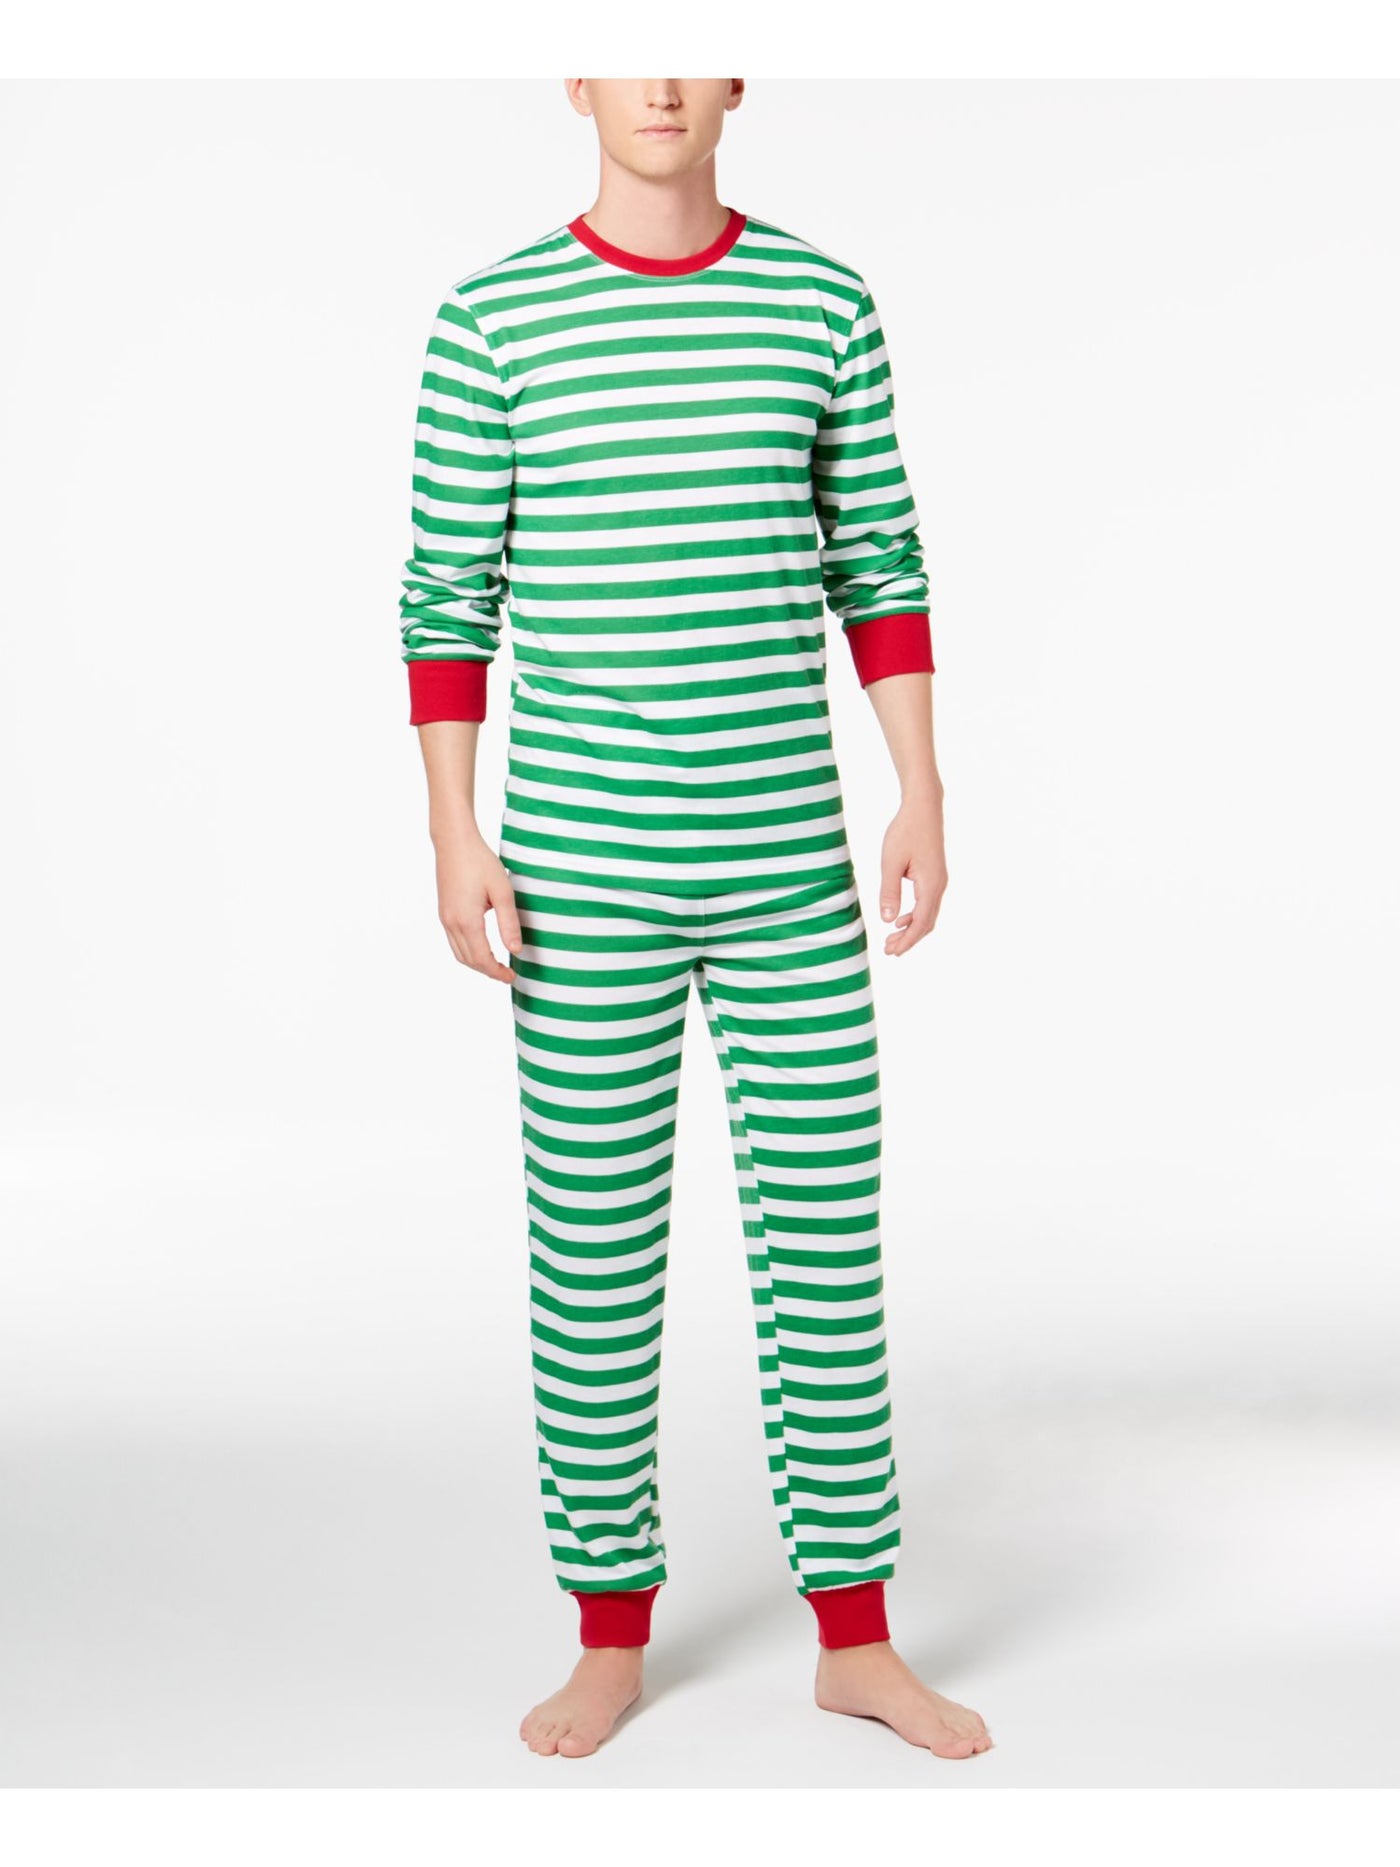 FAMILY PJs Mens Green Striped Drawstring Long Sleeve T-Shirt Top Cuffed Pants Pajamas M